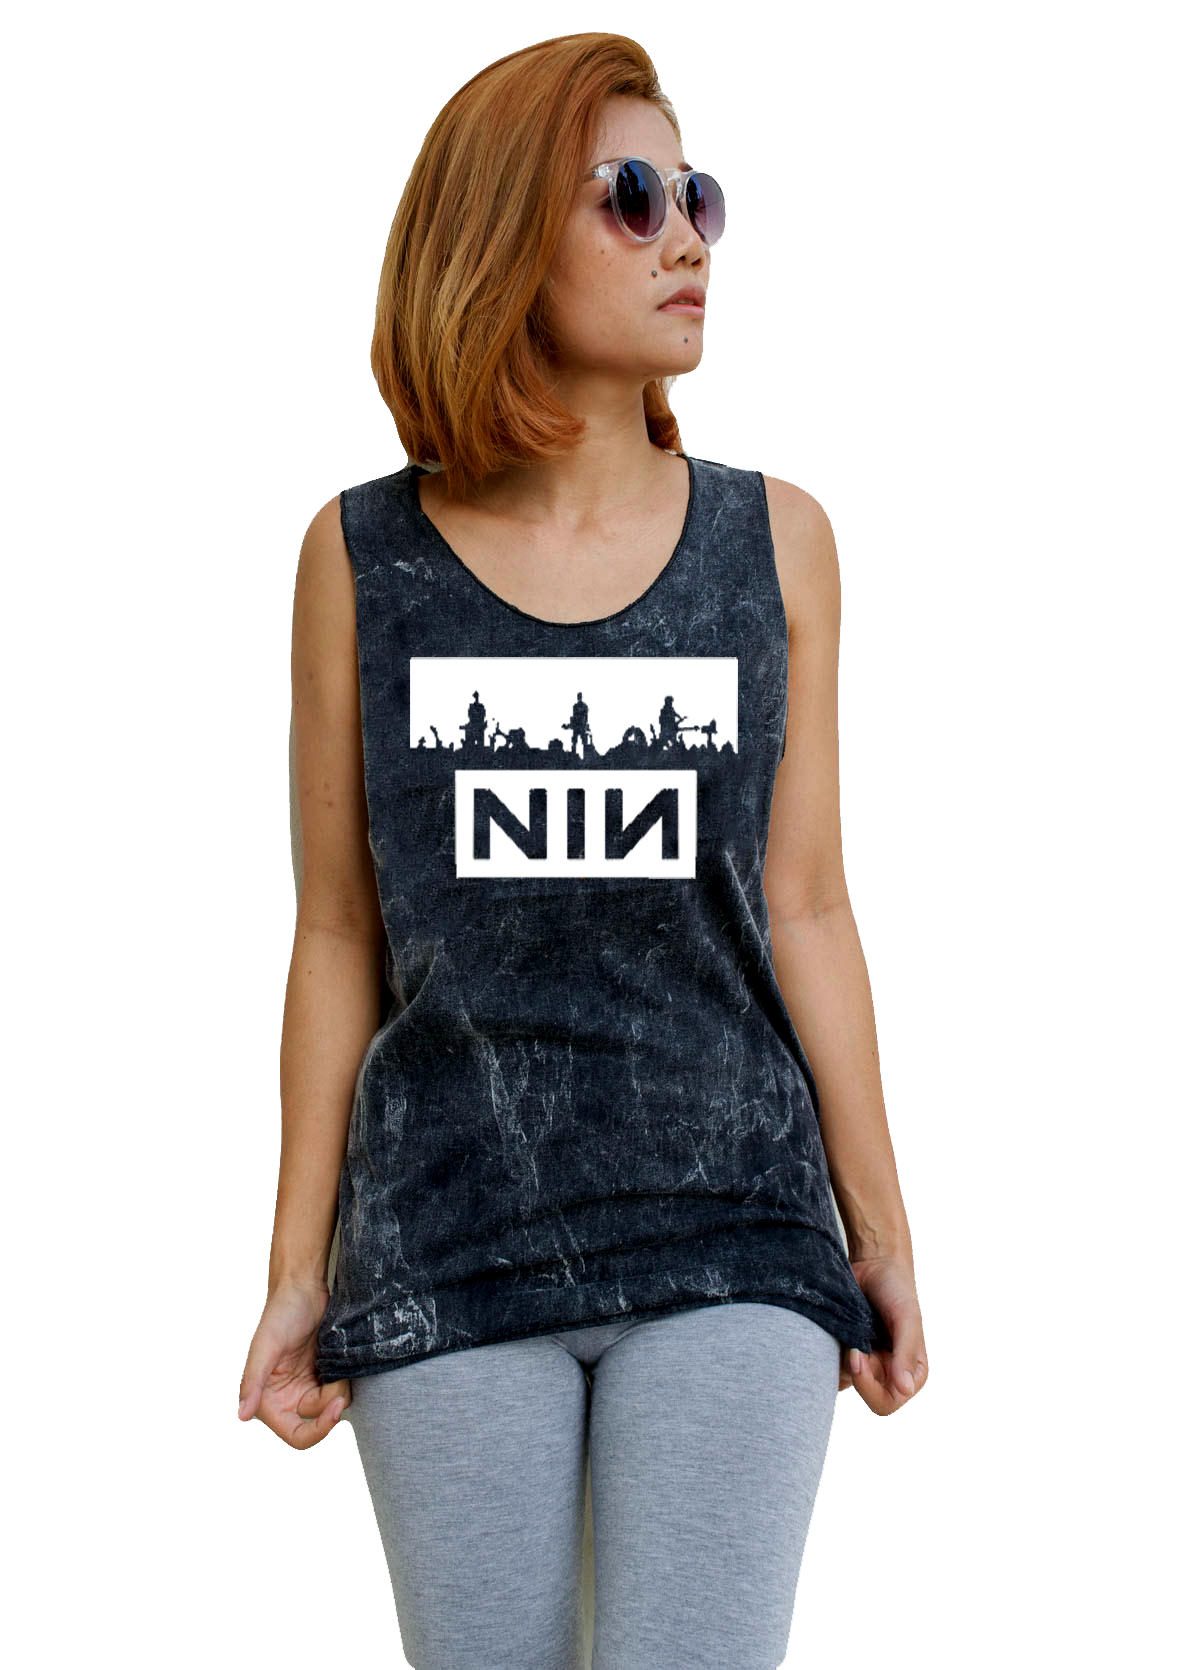 Unisex Nine Inch Nails Tank-Top Singlet vest Sleeveless T-shirt